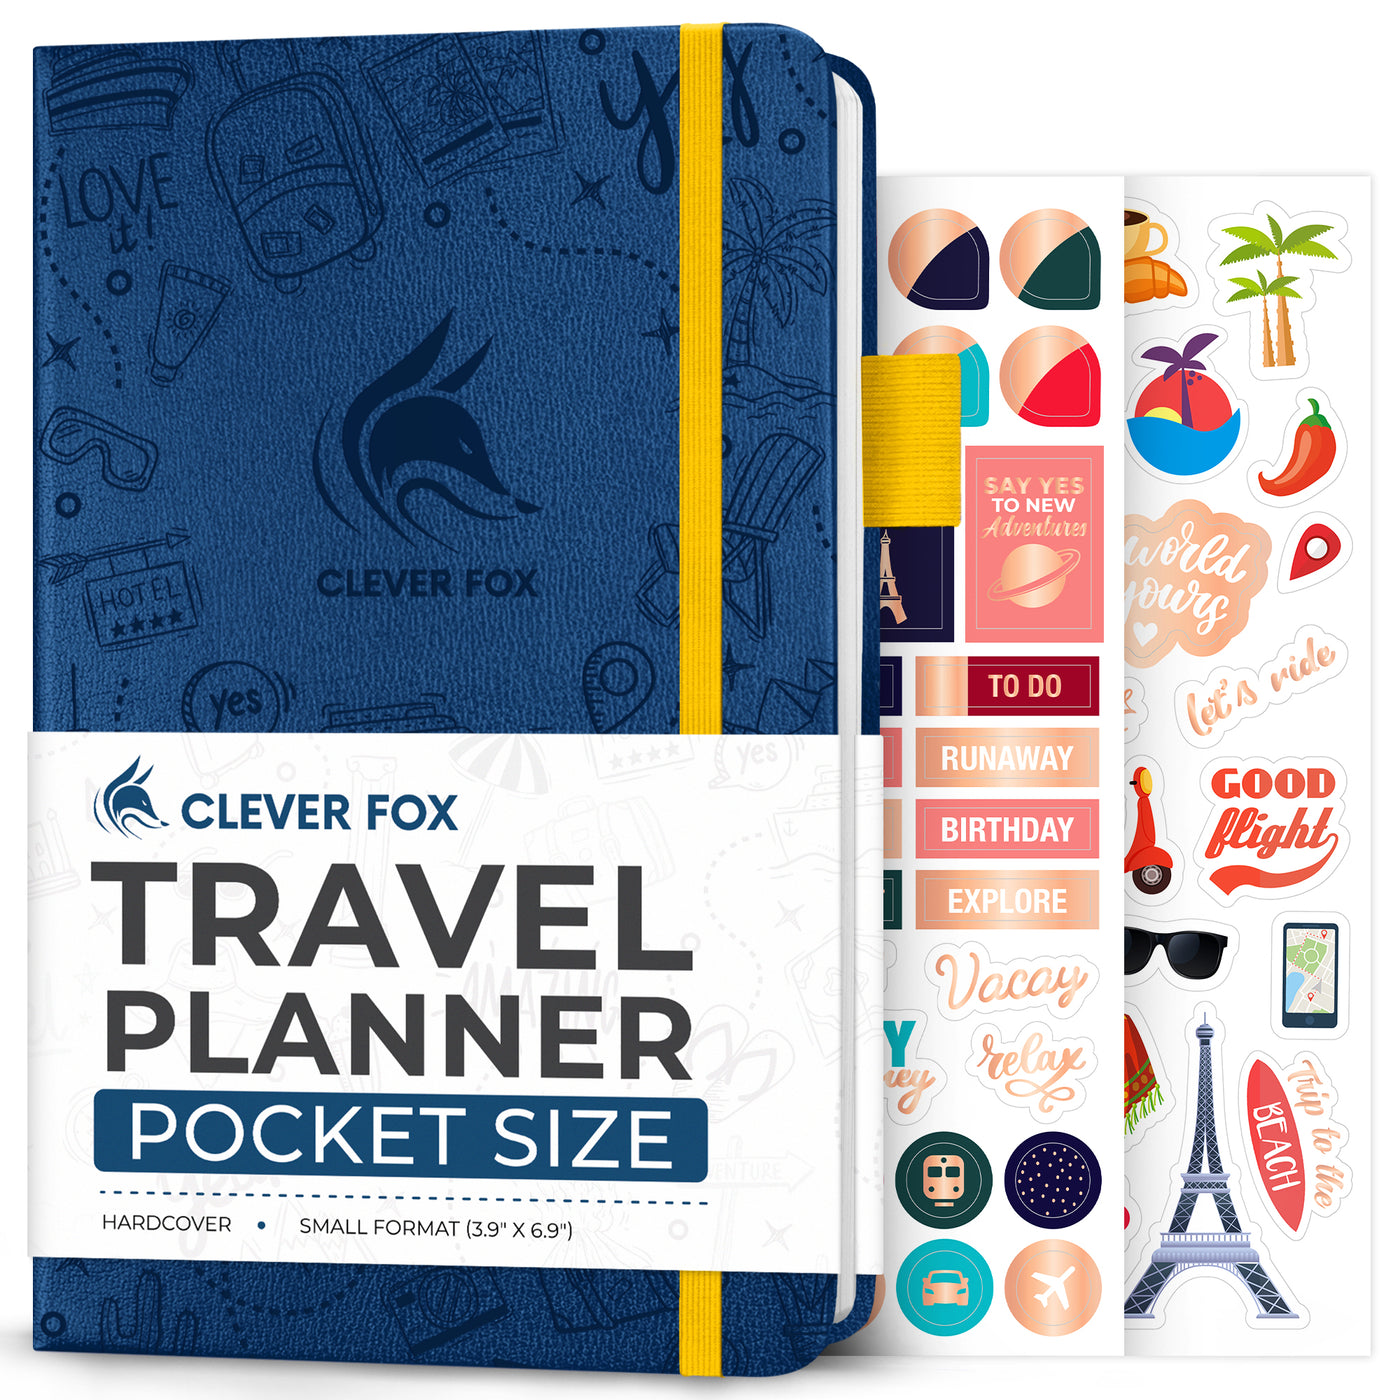 Travel Journal Pocket